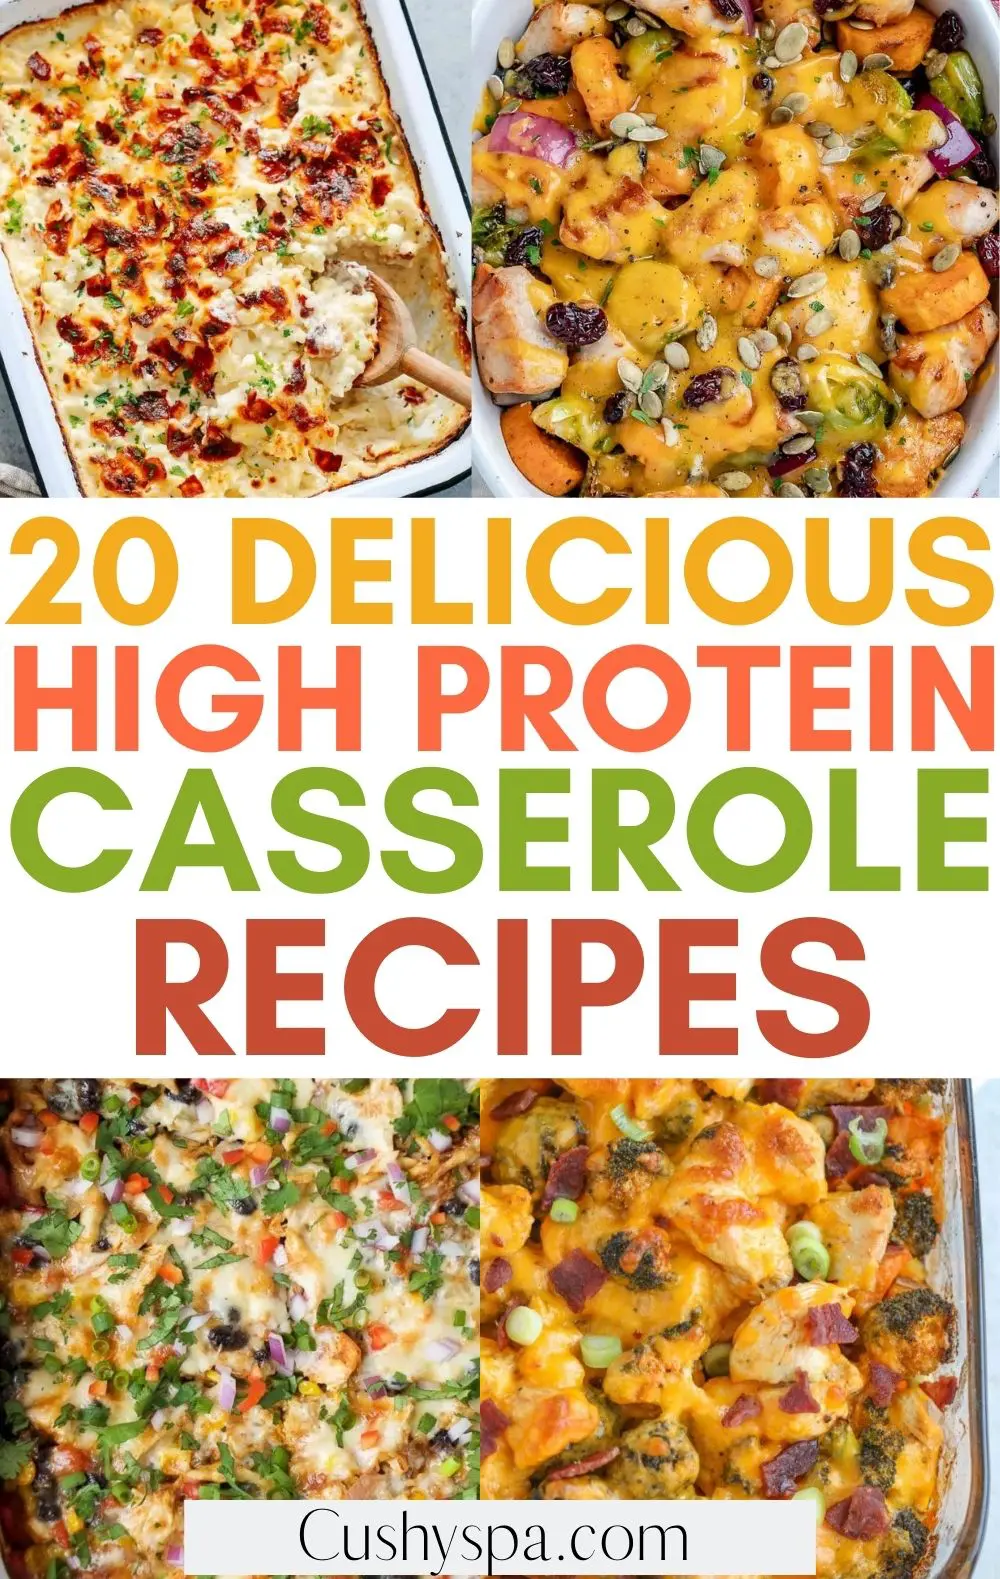 https://www.cushyspa.com/wp-content/uploads/2021/02/20-high-protein-casserole-recipes-1.jpg.webp